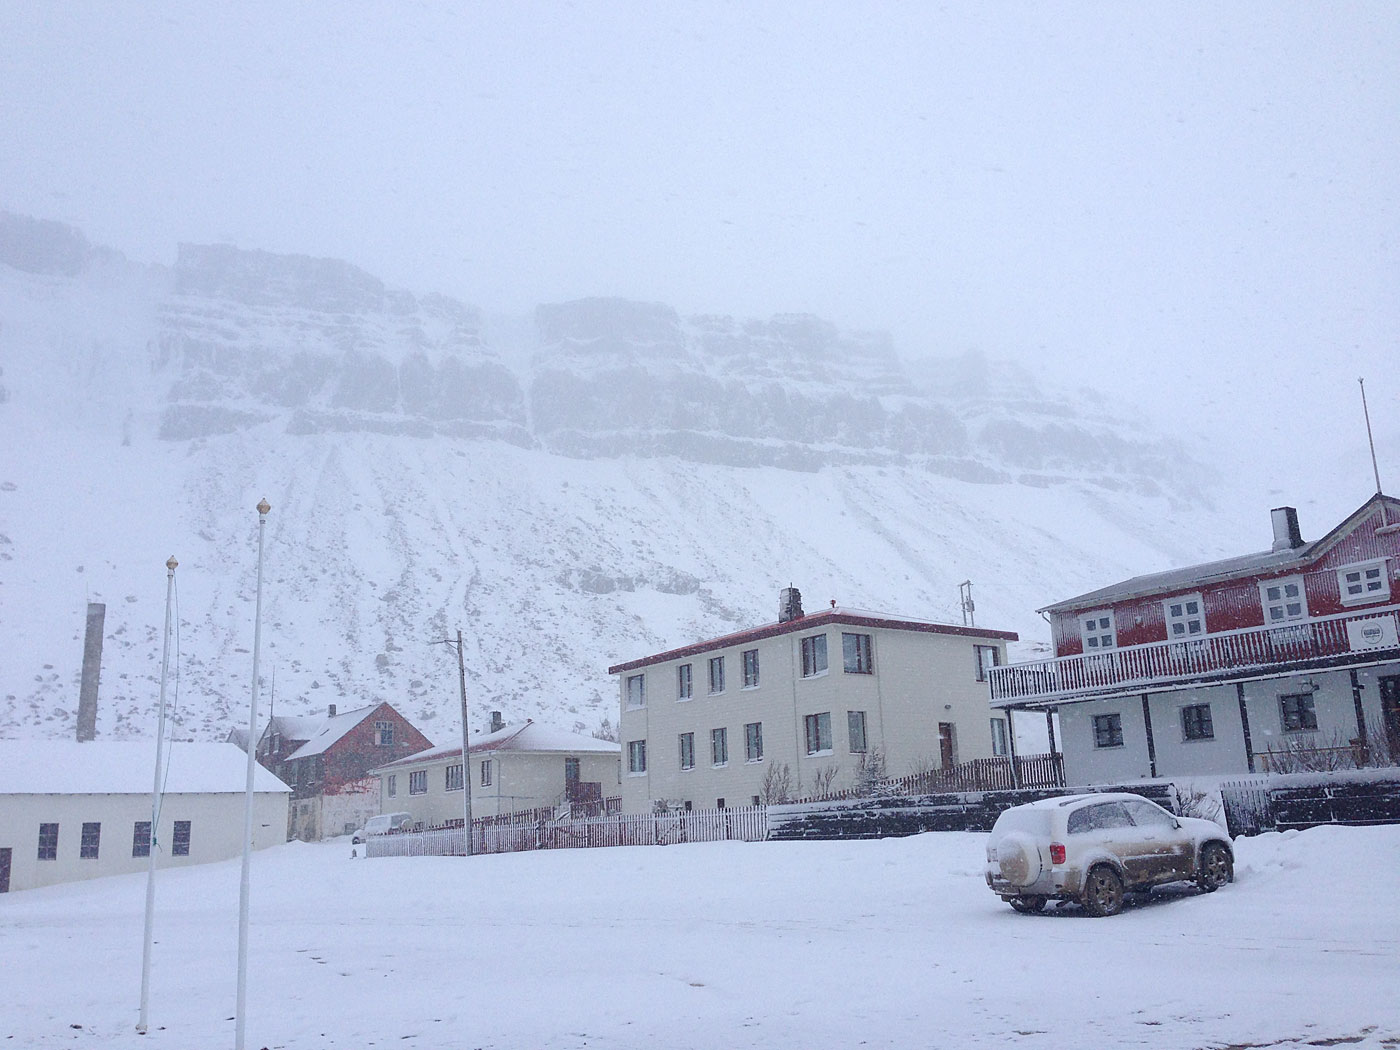 Djúpavík. Around Easter in Djúpavík. Friday. - Arrived - together with snow. (29 March 2013)